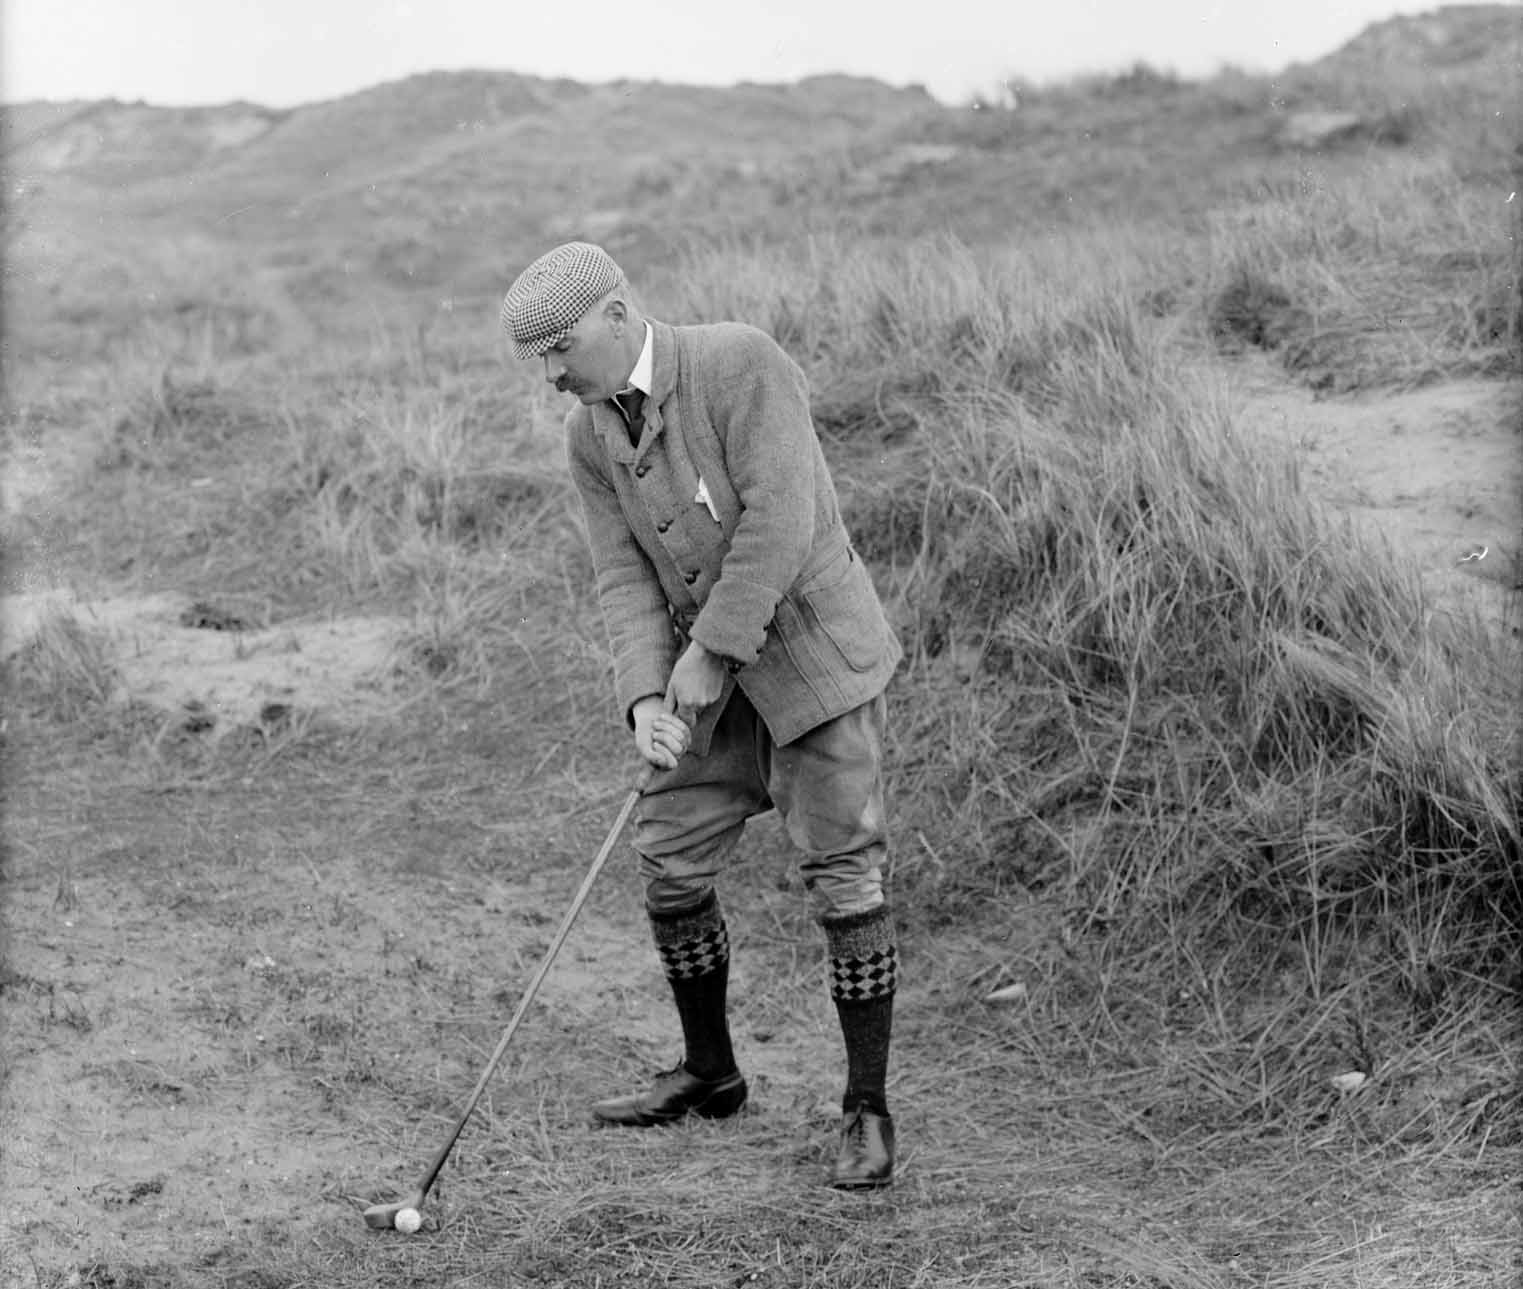 Golf at Tramore Ireland, 15 April 1901. National Library of Ireland/Flikr.